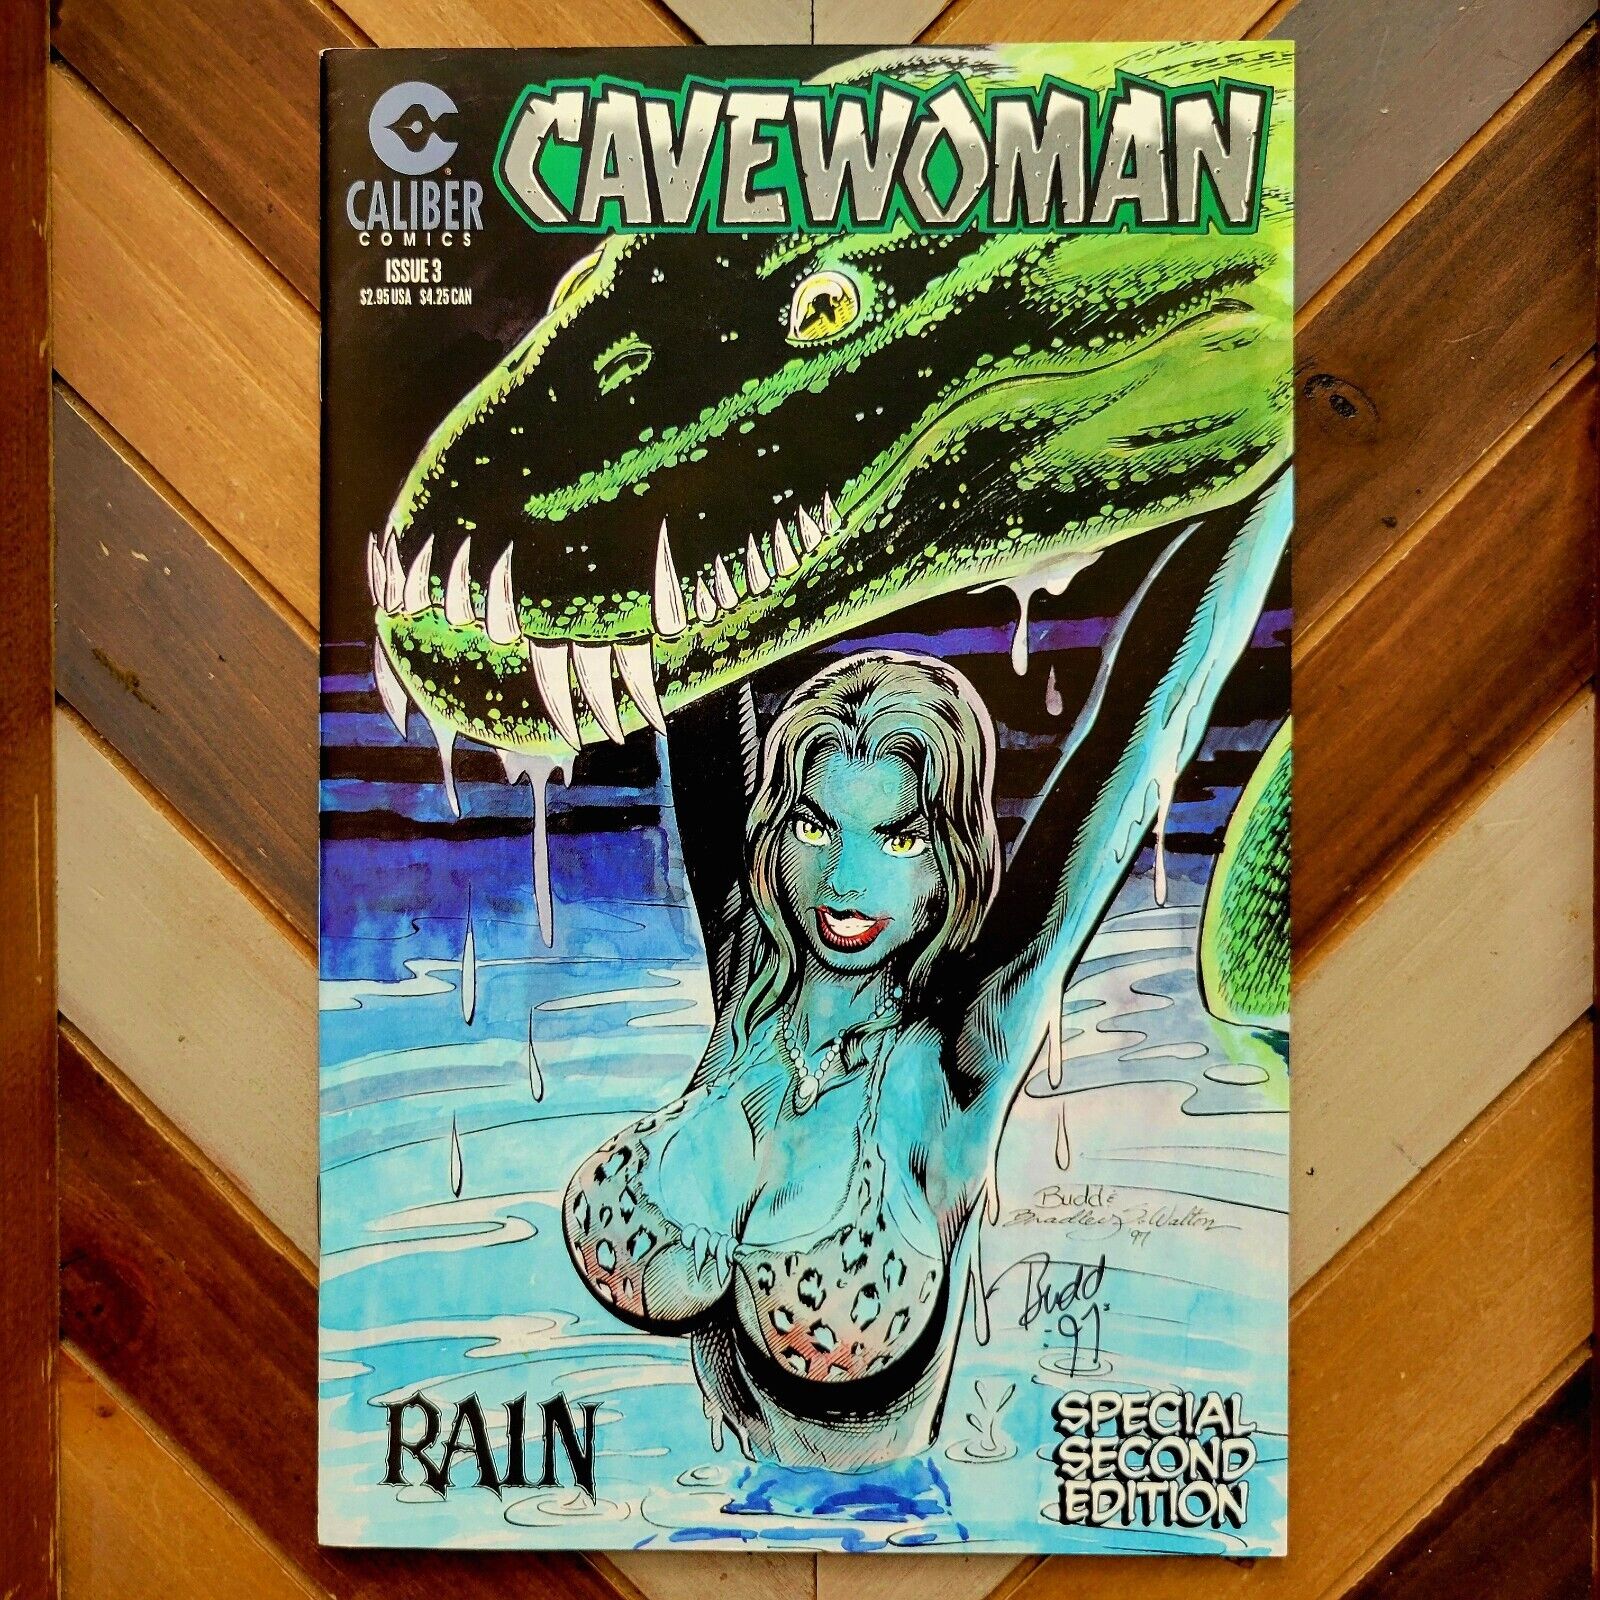 CAVEWOMAN: Rain #3 VF/NM (Caliber 1997) SIGNED by BUD ROOT Scarce 2nd Printing